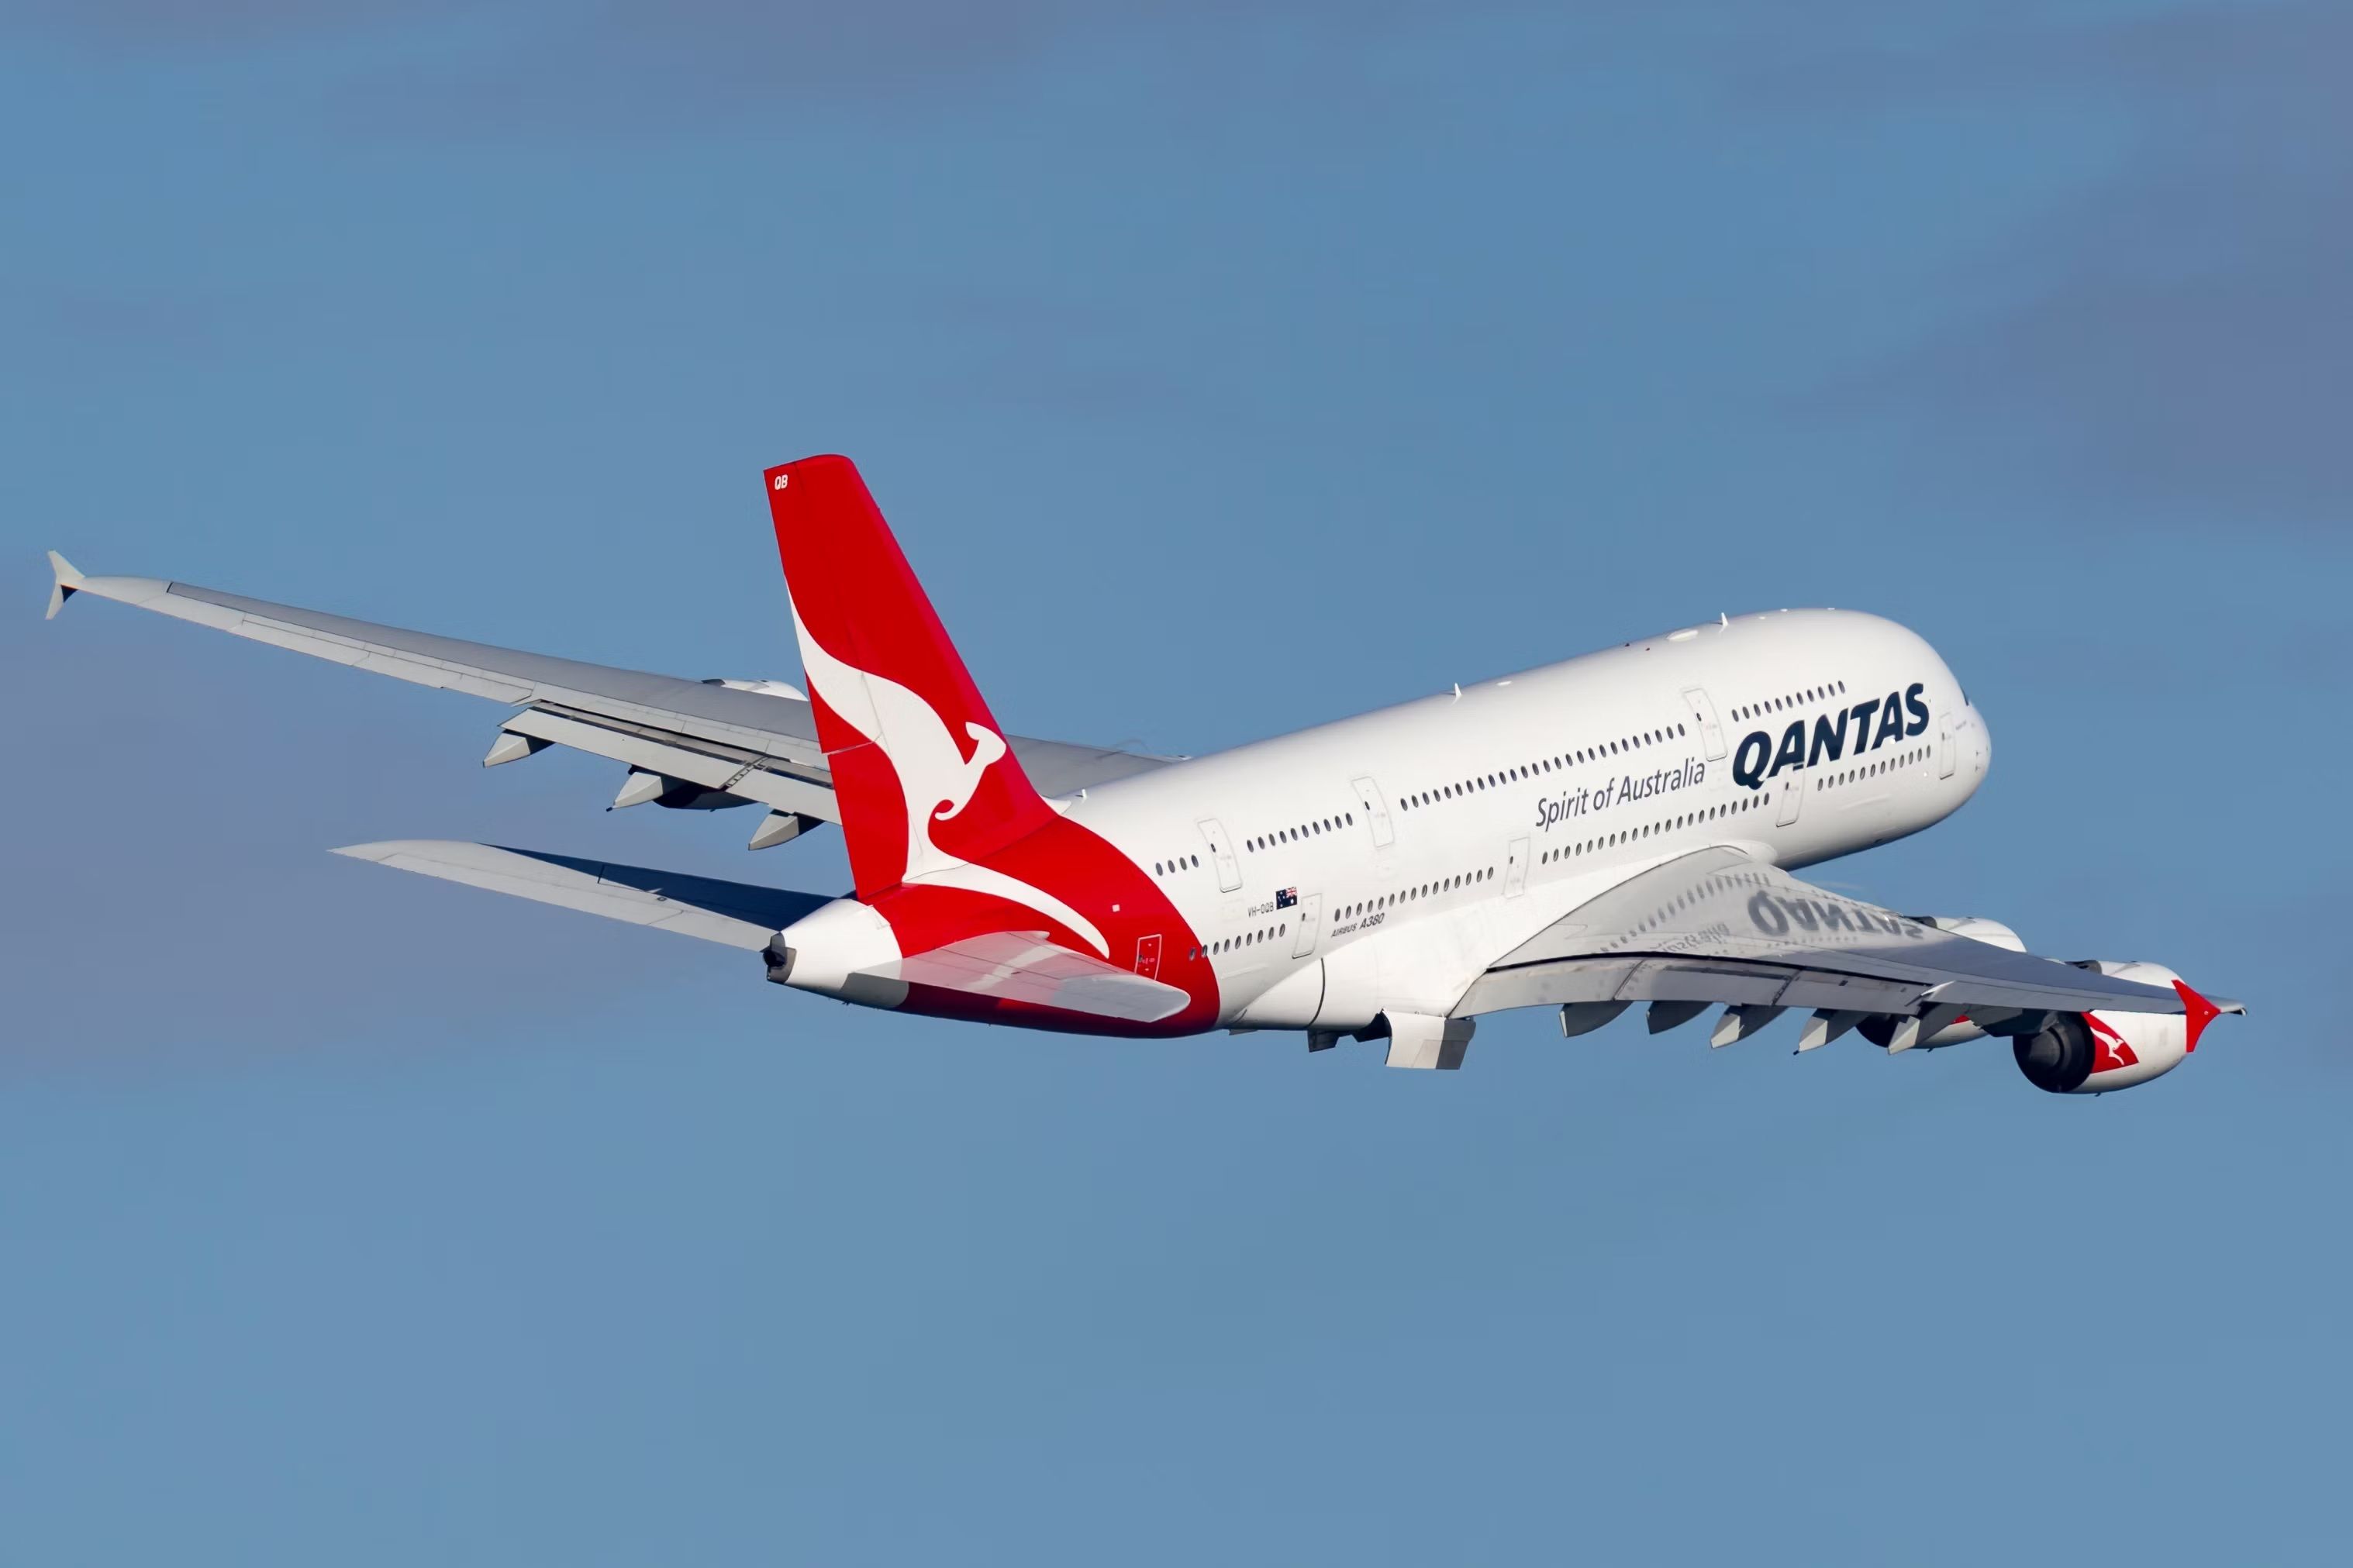 Qantas A380 take off